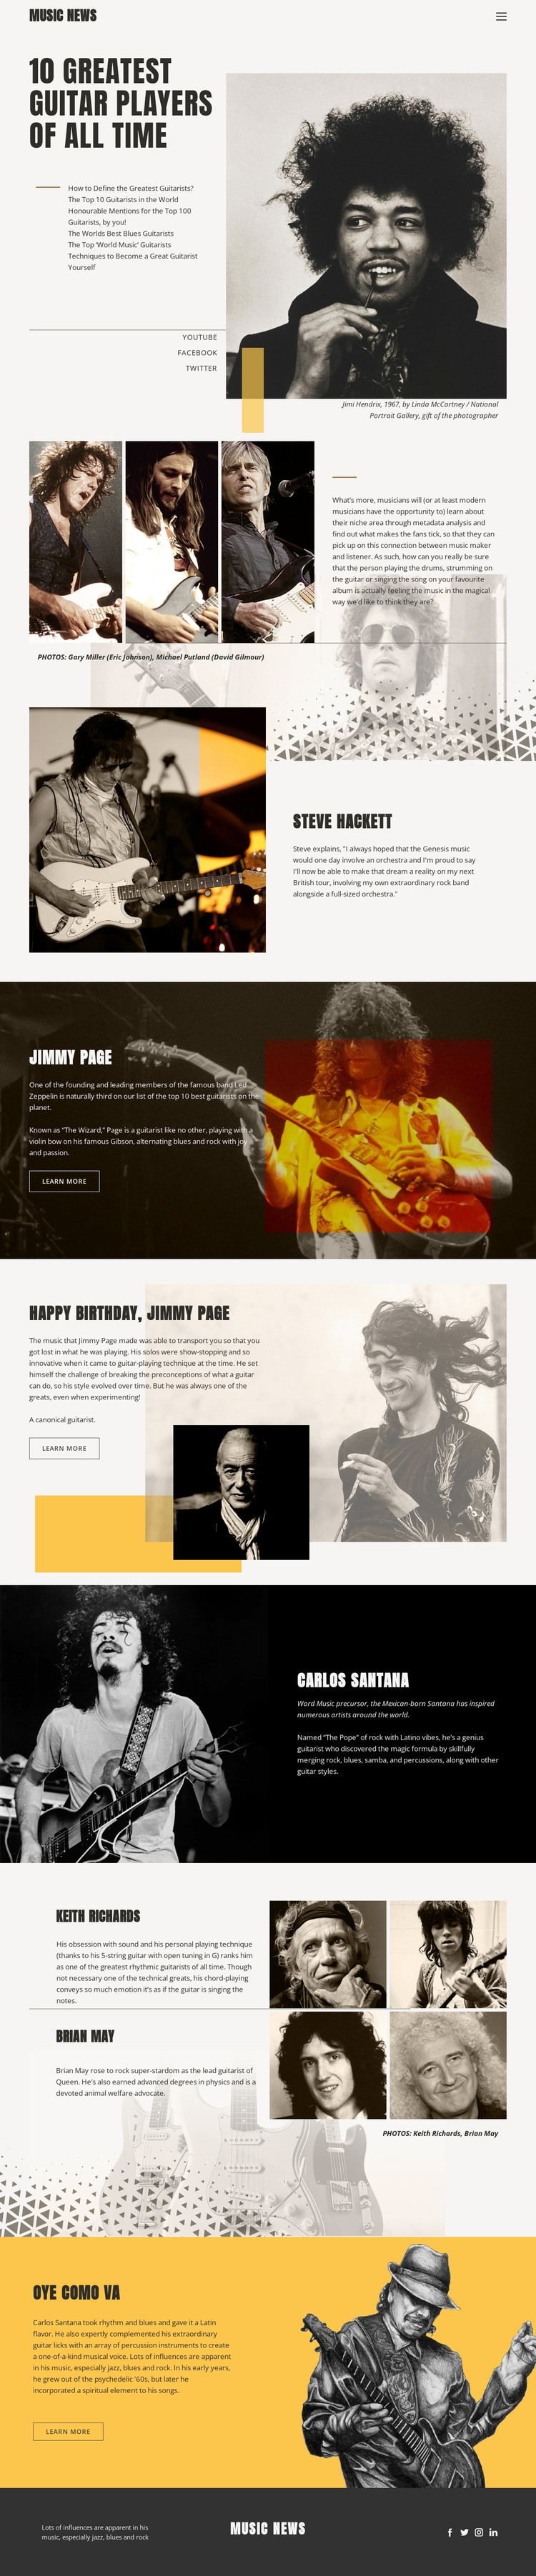 The Top Guitar Players Web Design